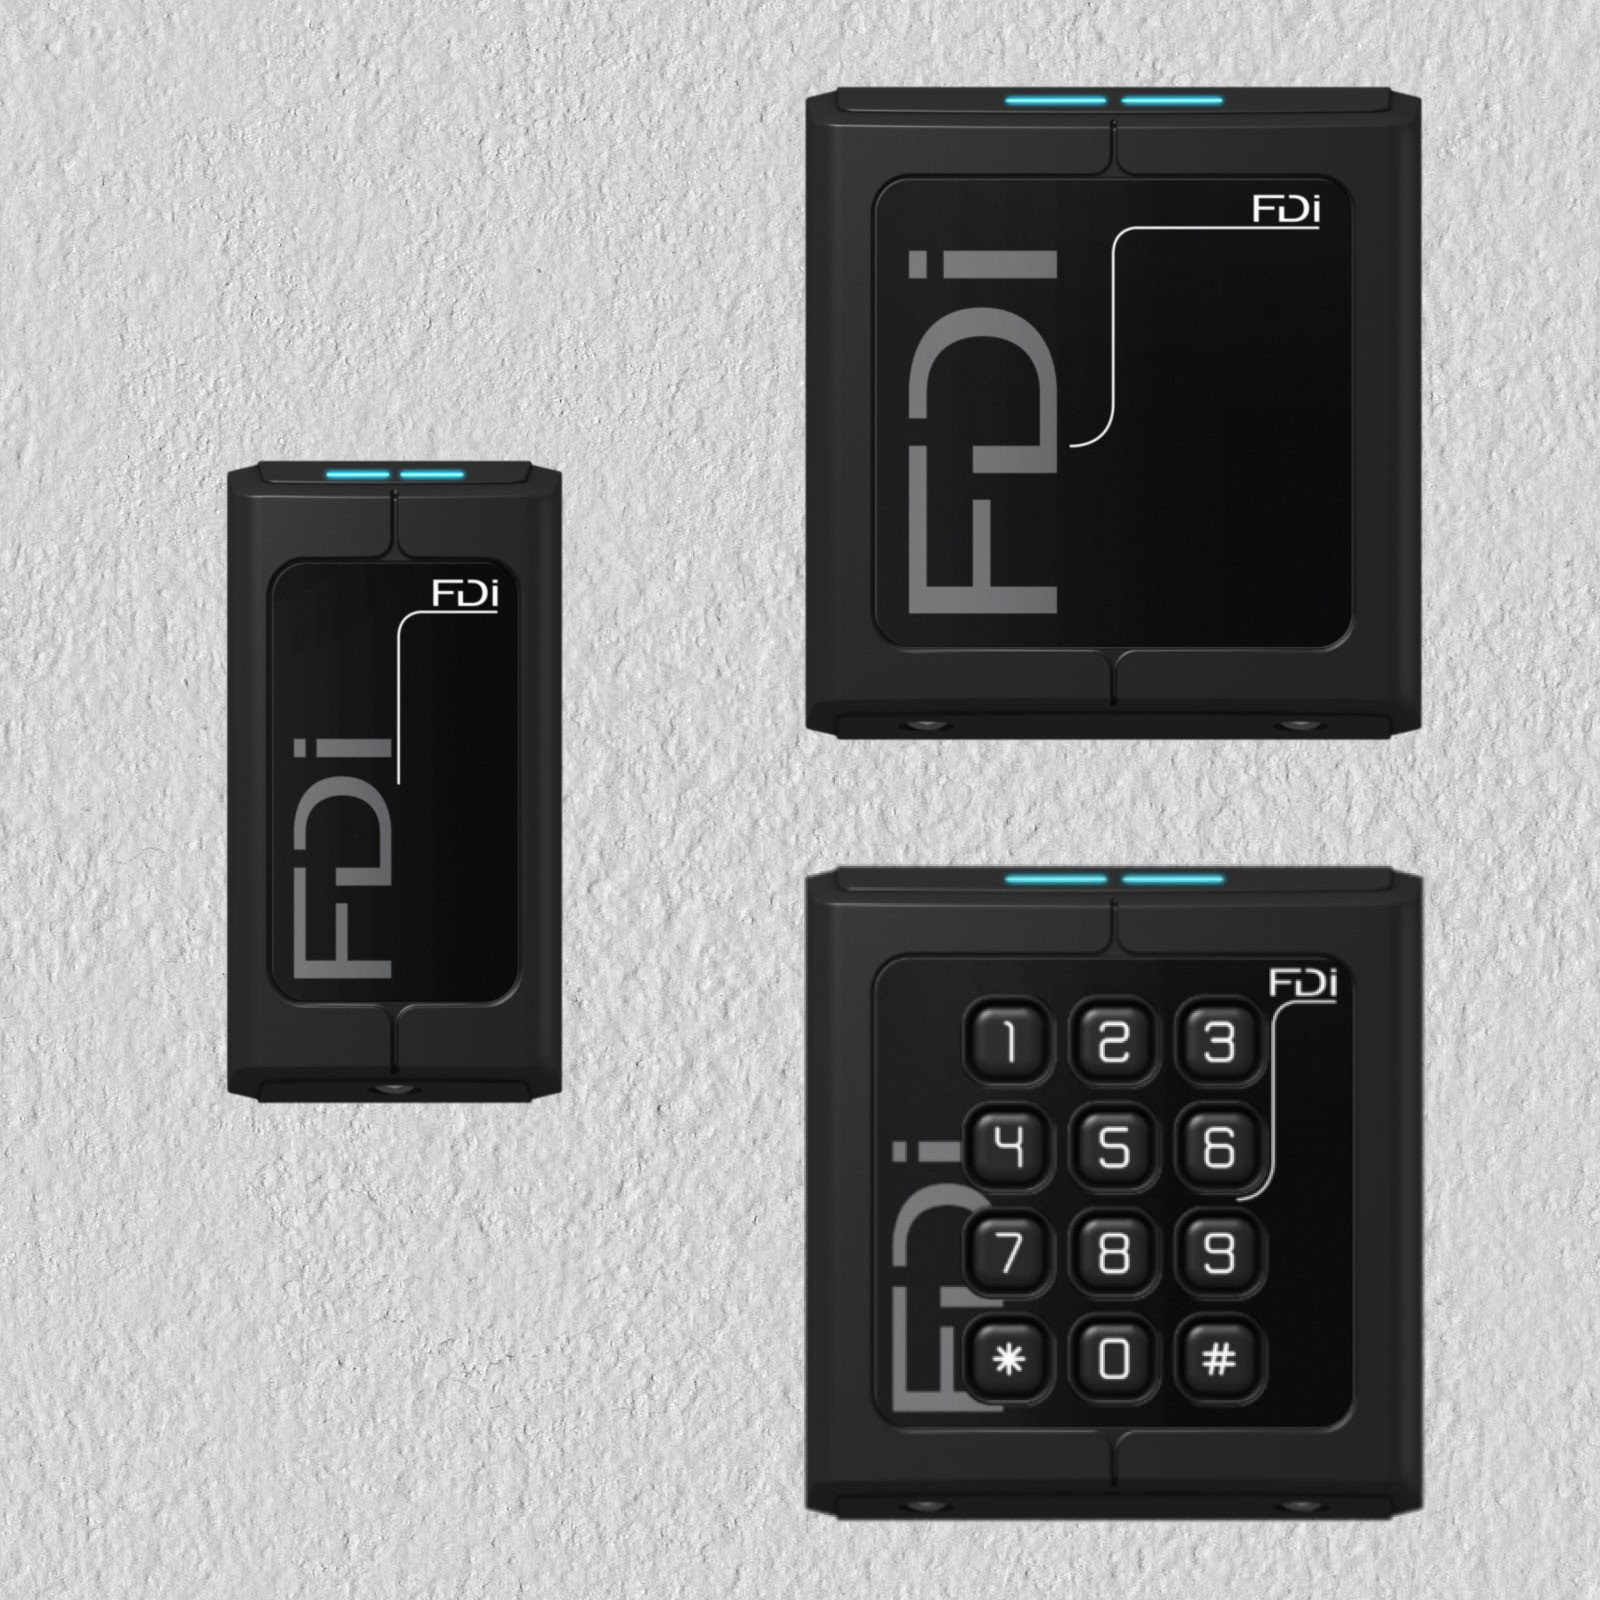 Nova serija Bluetooth 2-Smart čitalcev vodilnega proizvajalca sistemov kontrole dostopa FDI